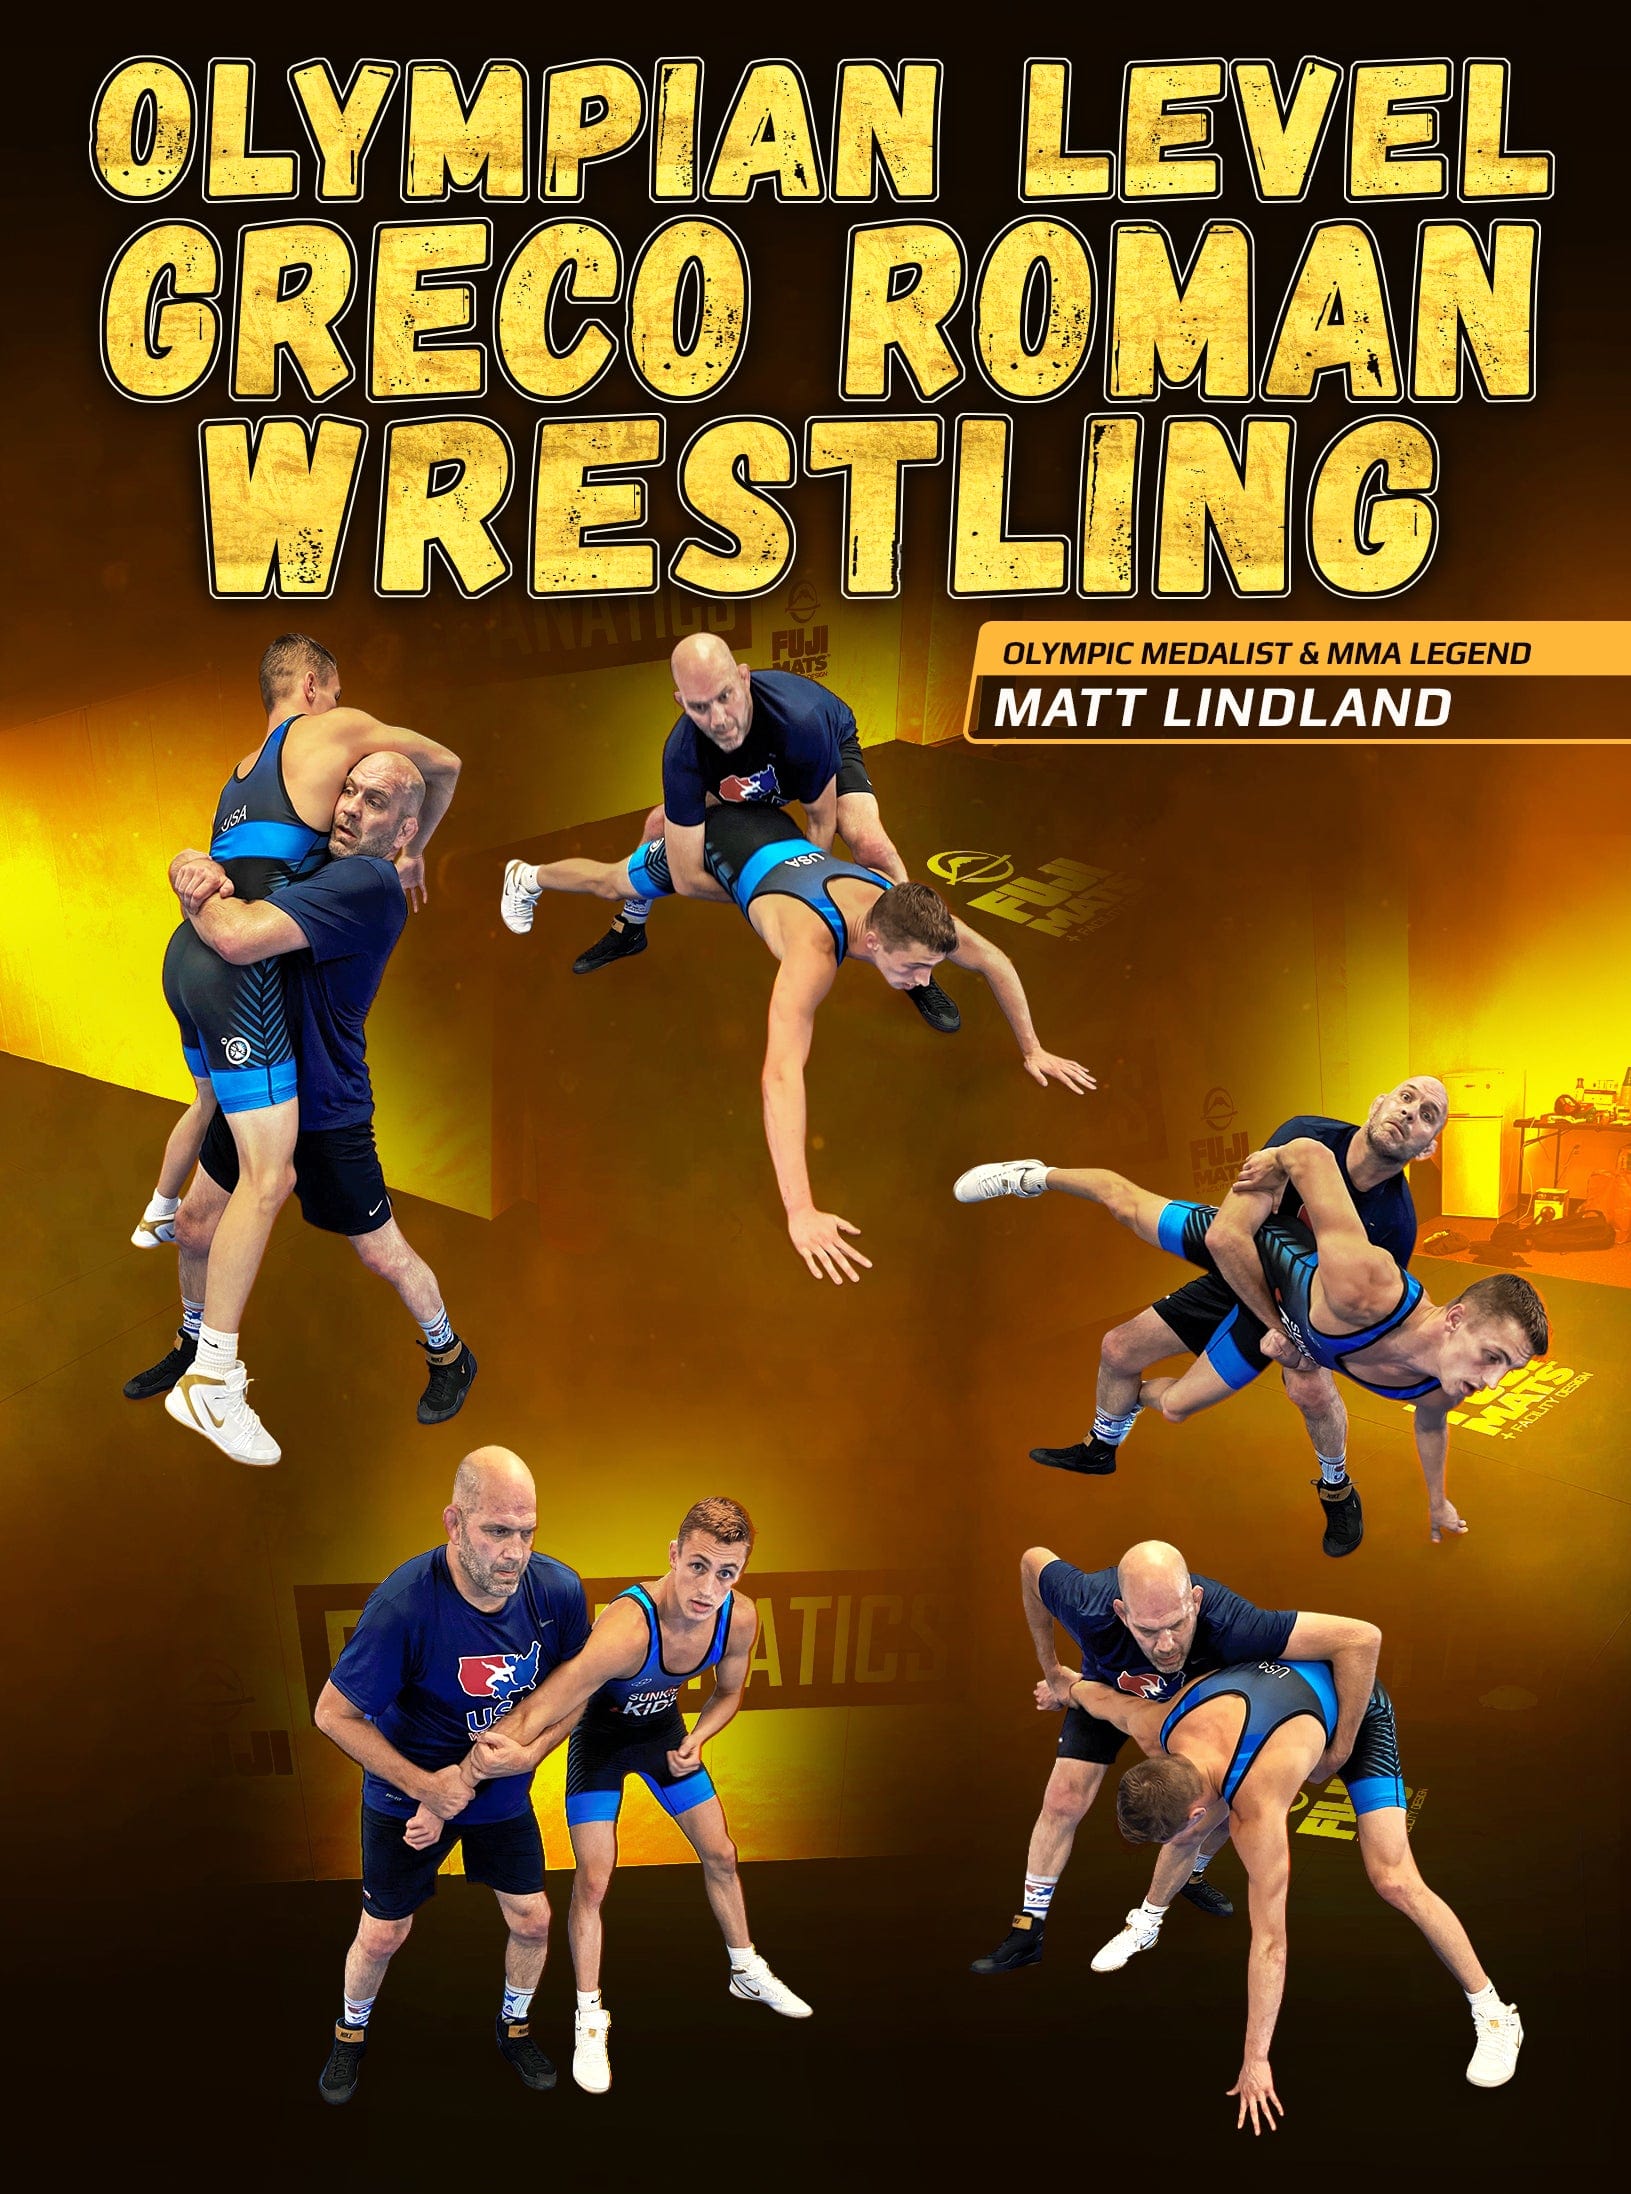 Olympian Level greco Roman Wrestling by Matt Lindland - Fanatic Wrestling